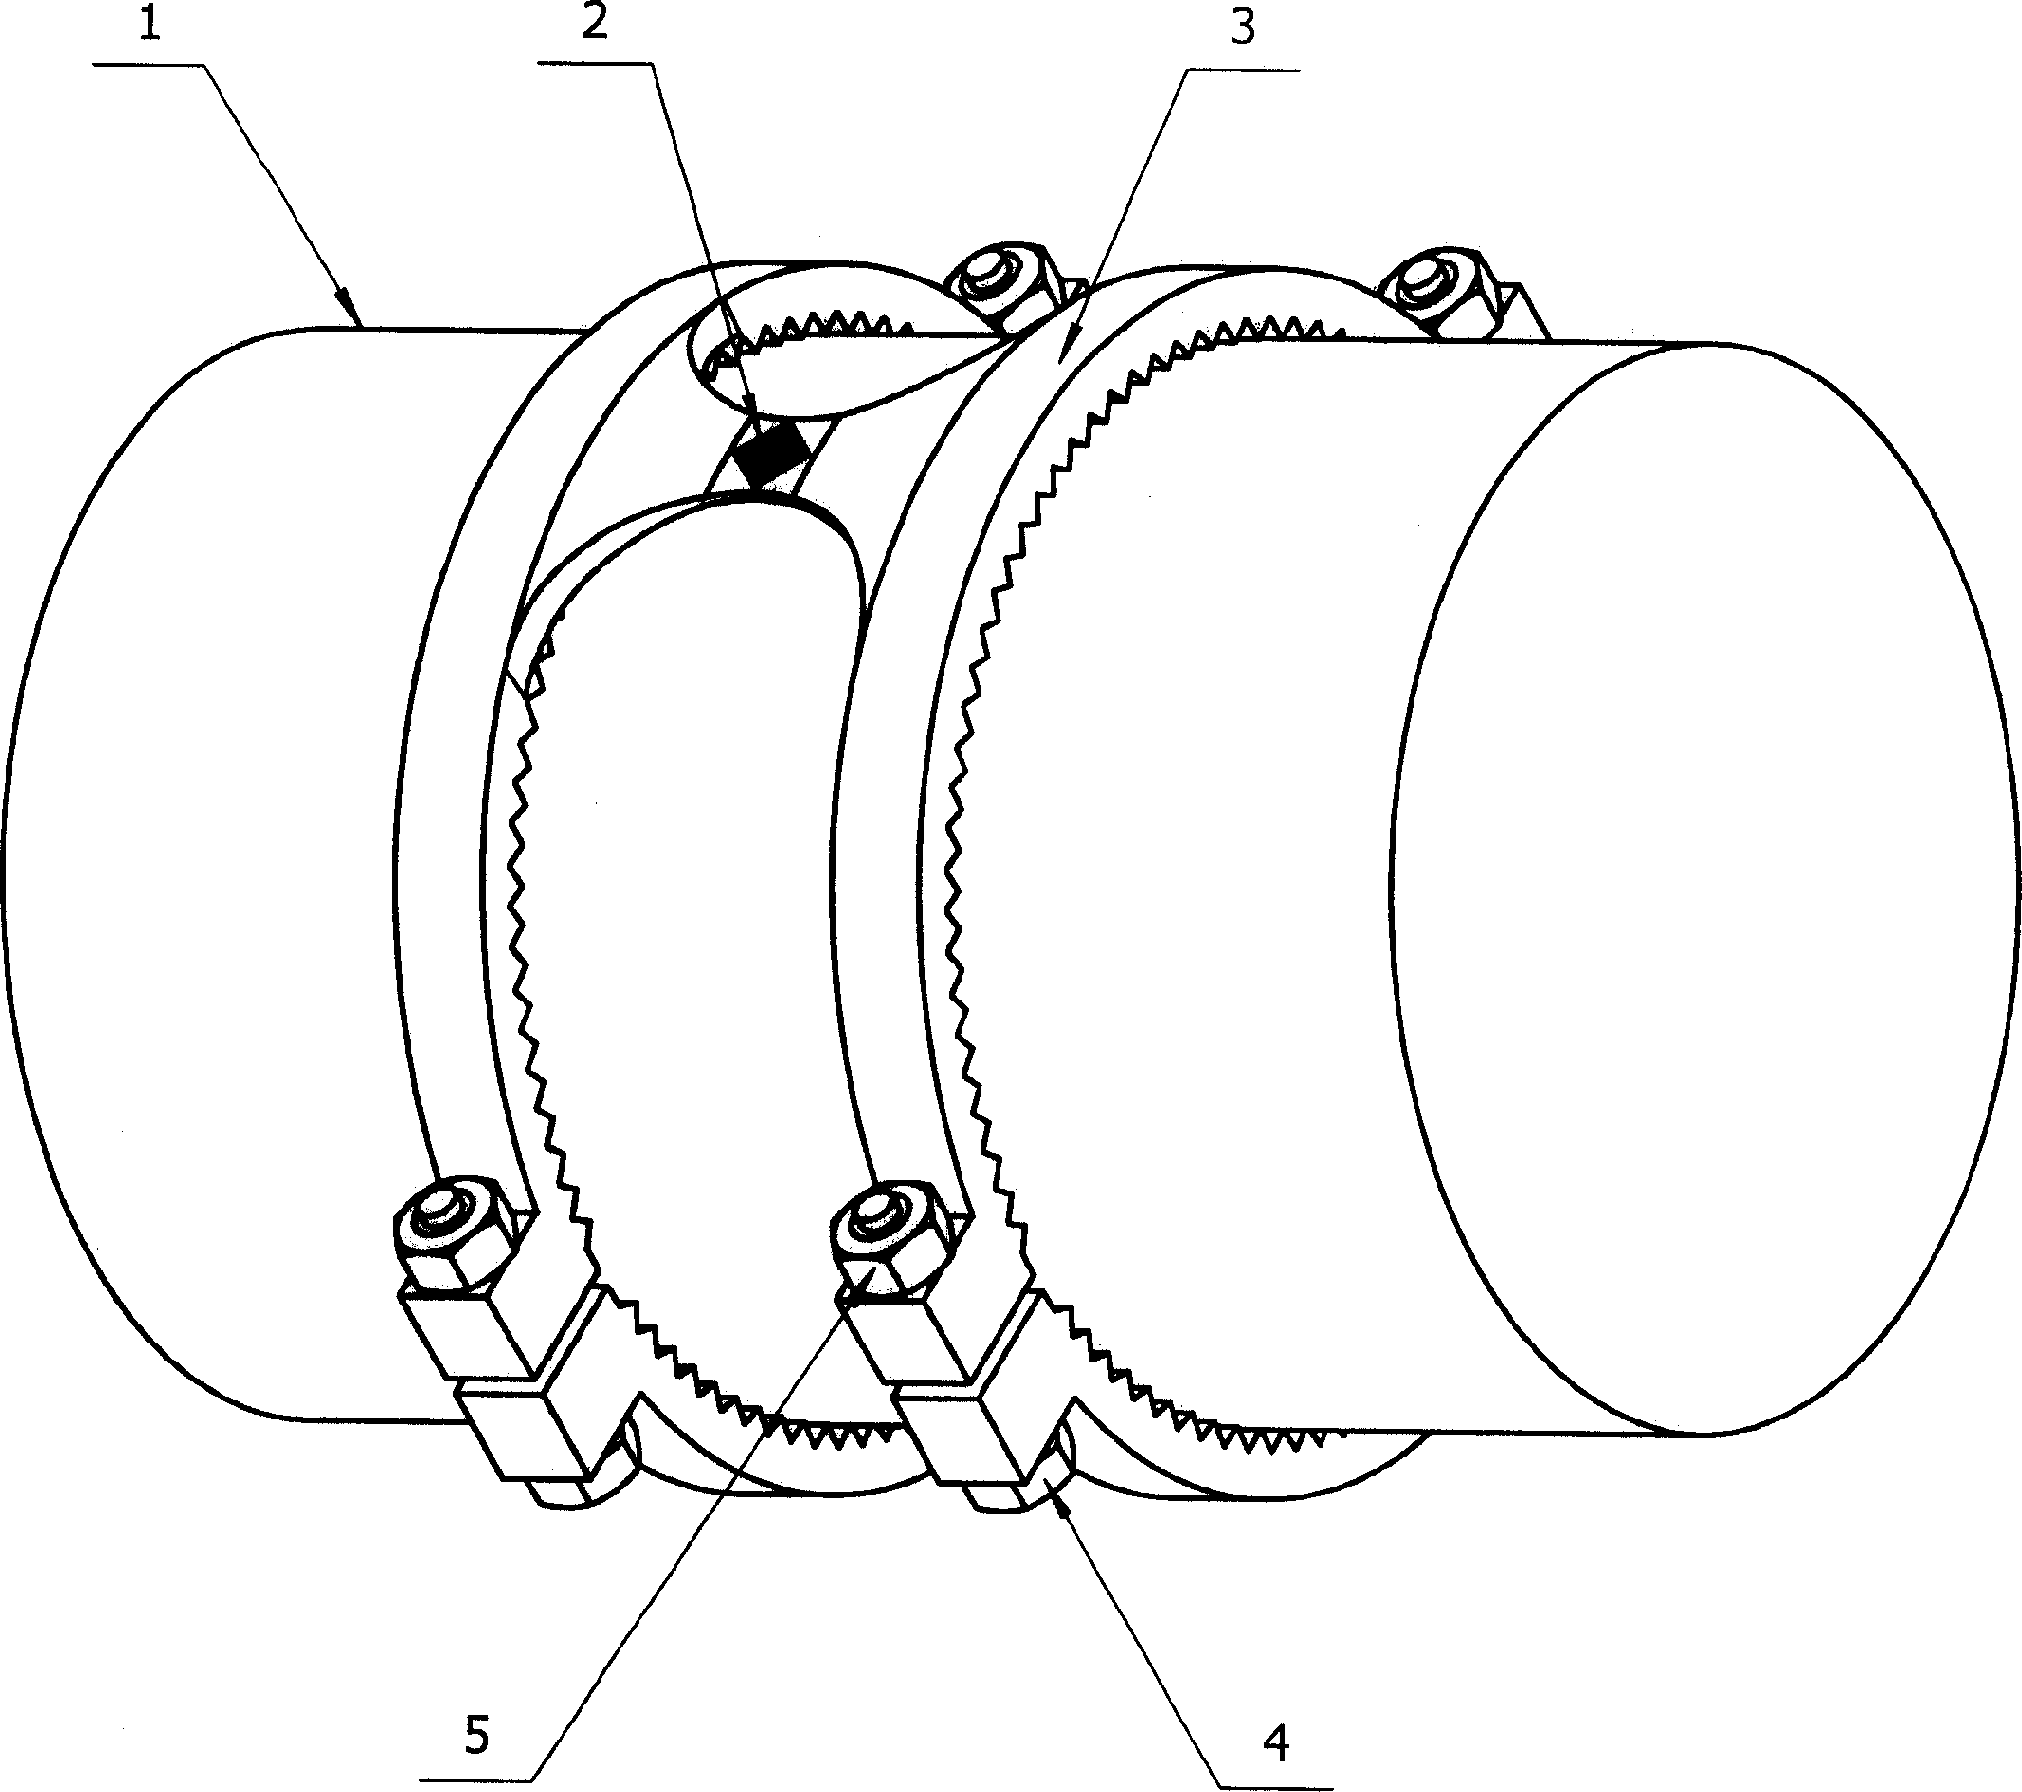 Clamp ring type torque sensor